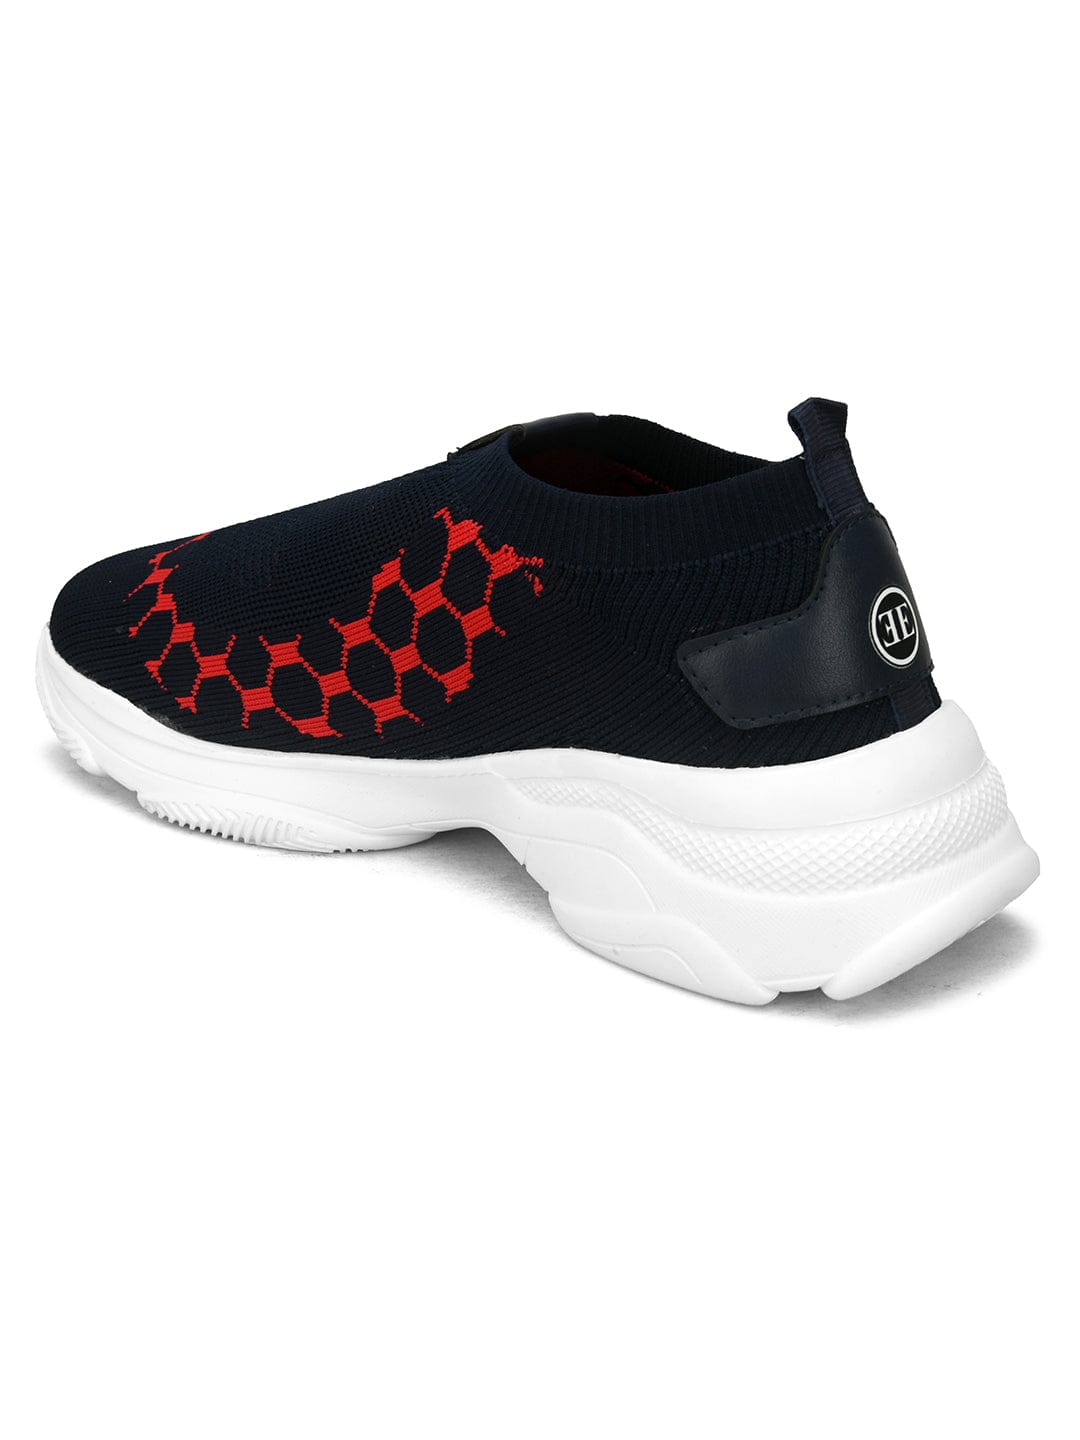 ESMEE Sports Slip On Running Shoes